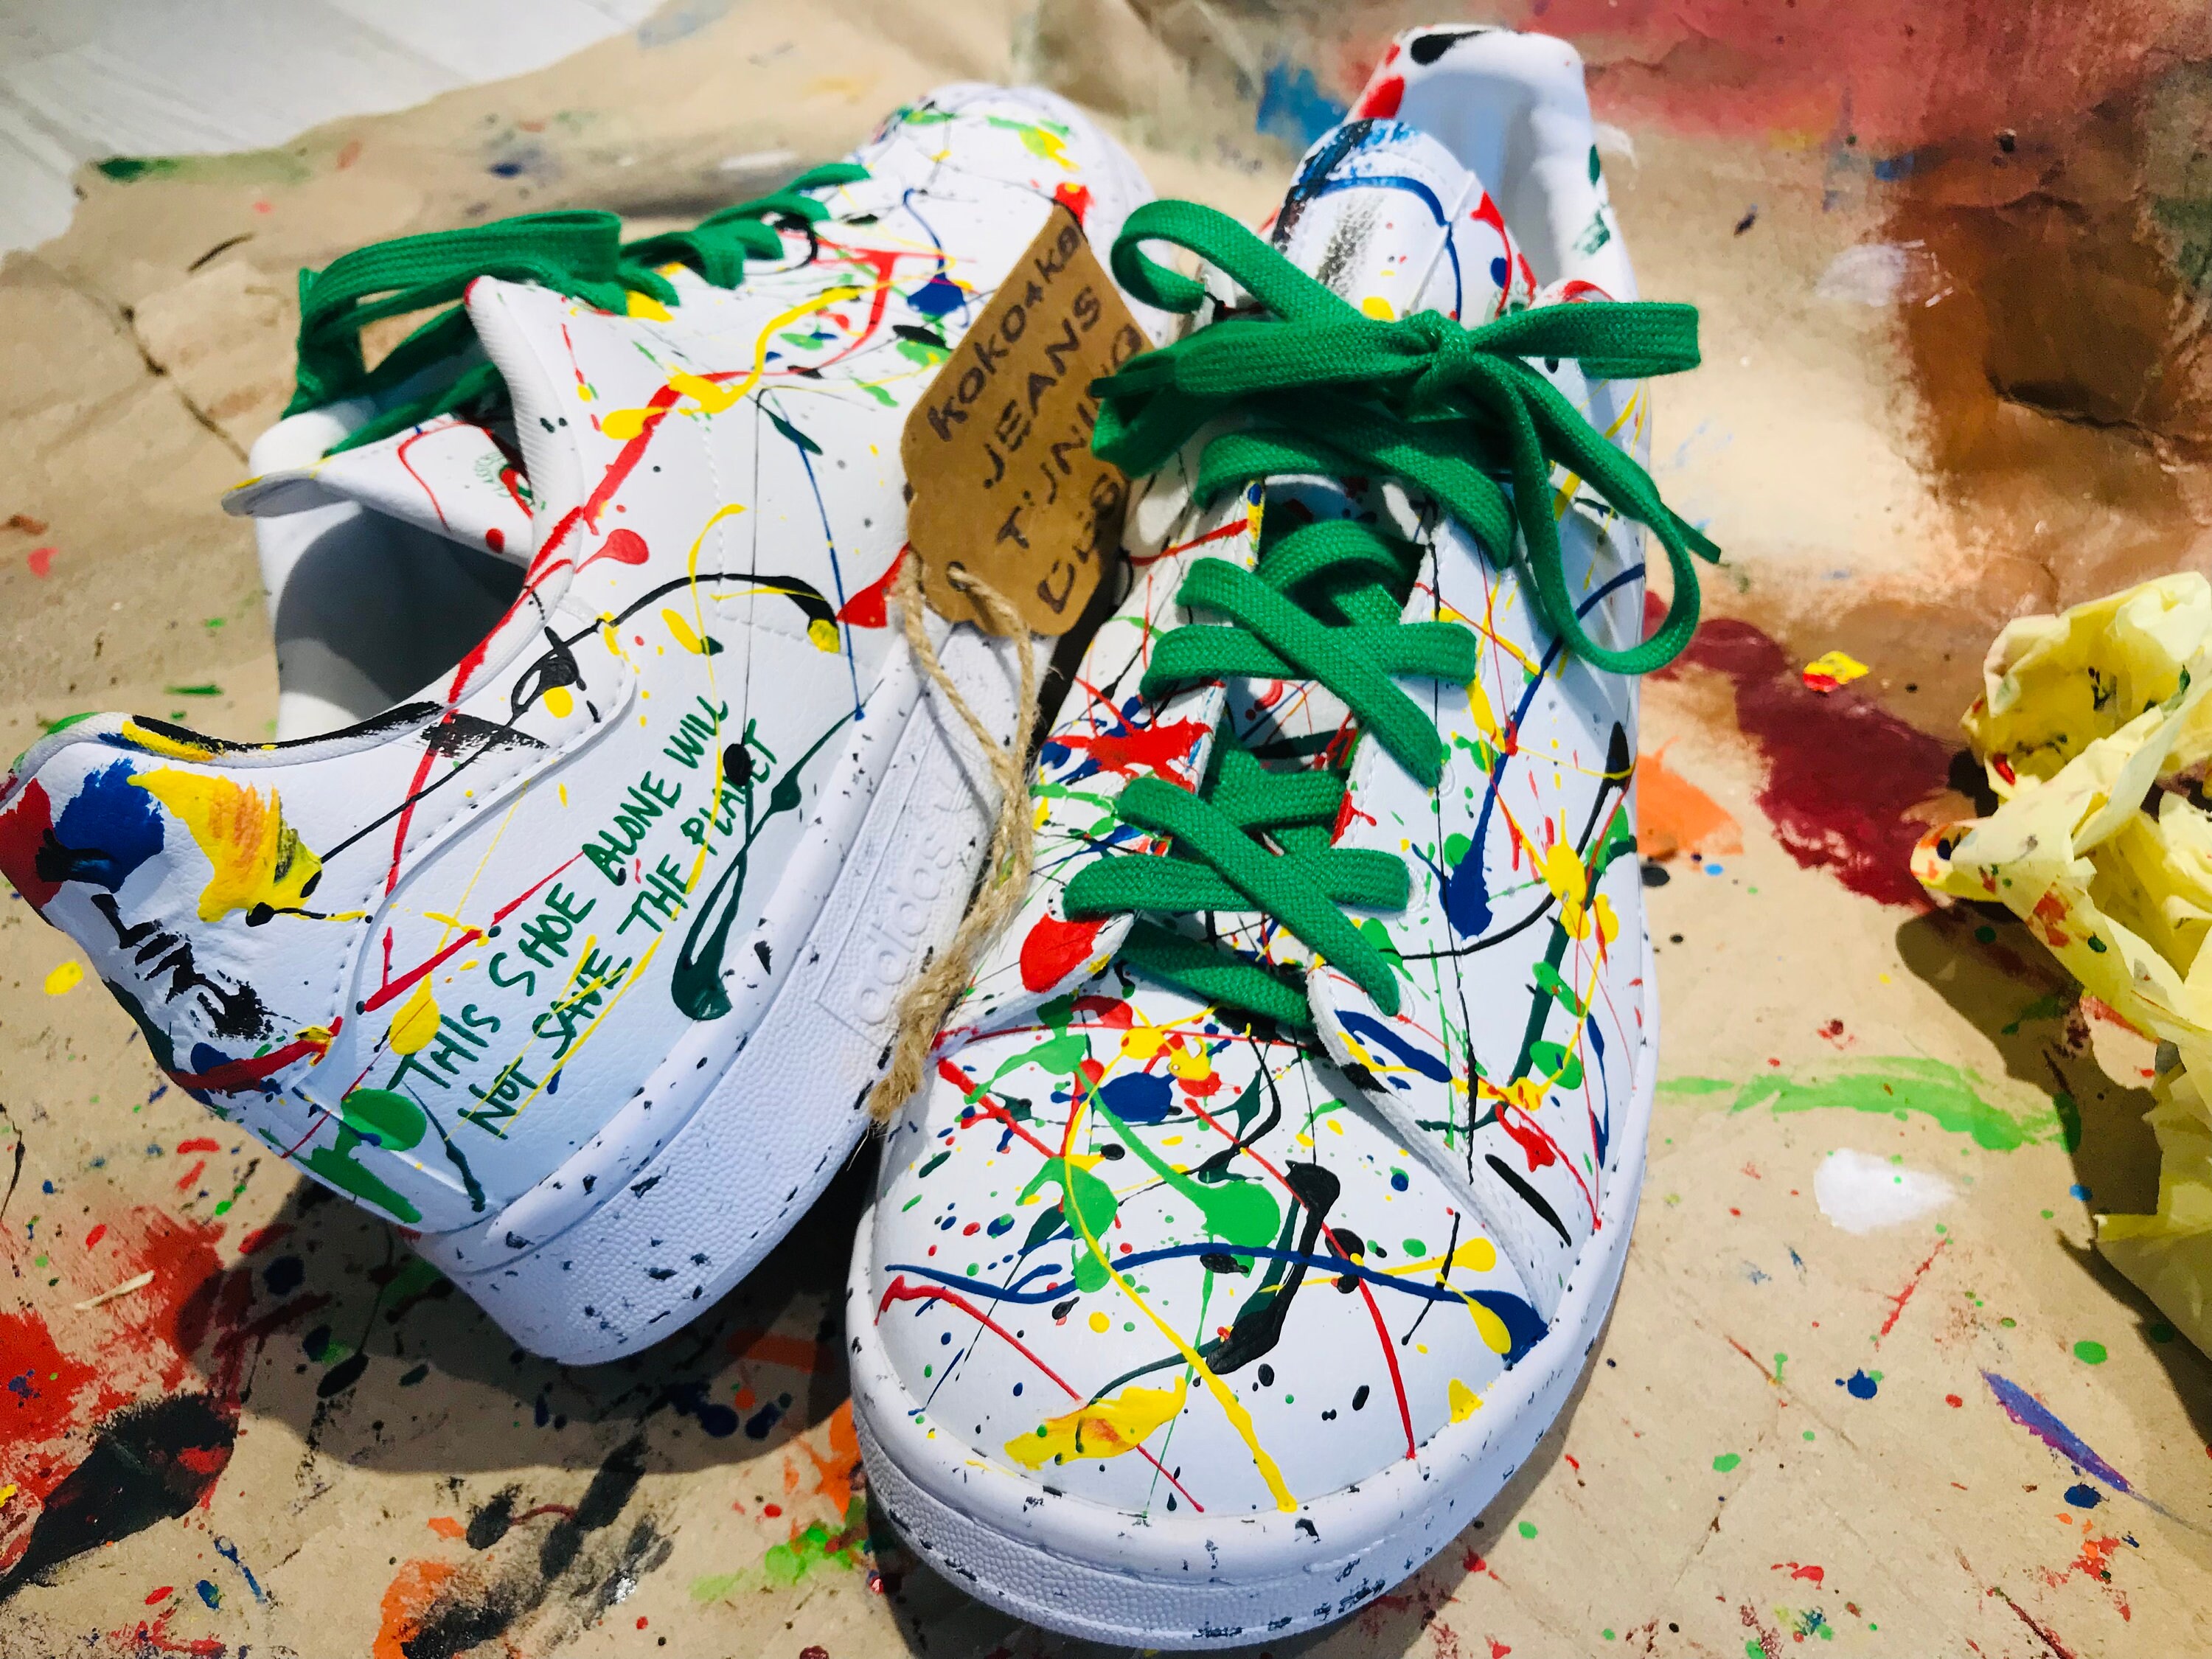 Converse Sneakers Paint Nike Women's Sneakers Paint Spray Paint Sneakers Recycled Sneakers Bright Sneakers Creative Sneakers Adidas Sneakers